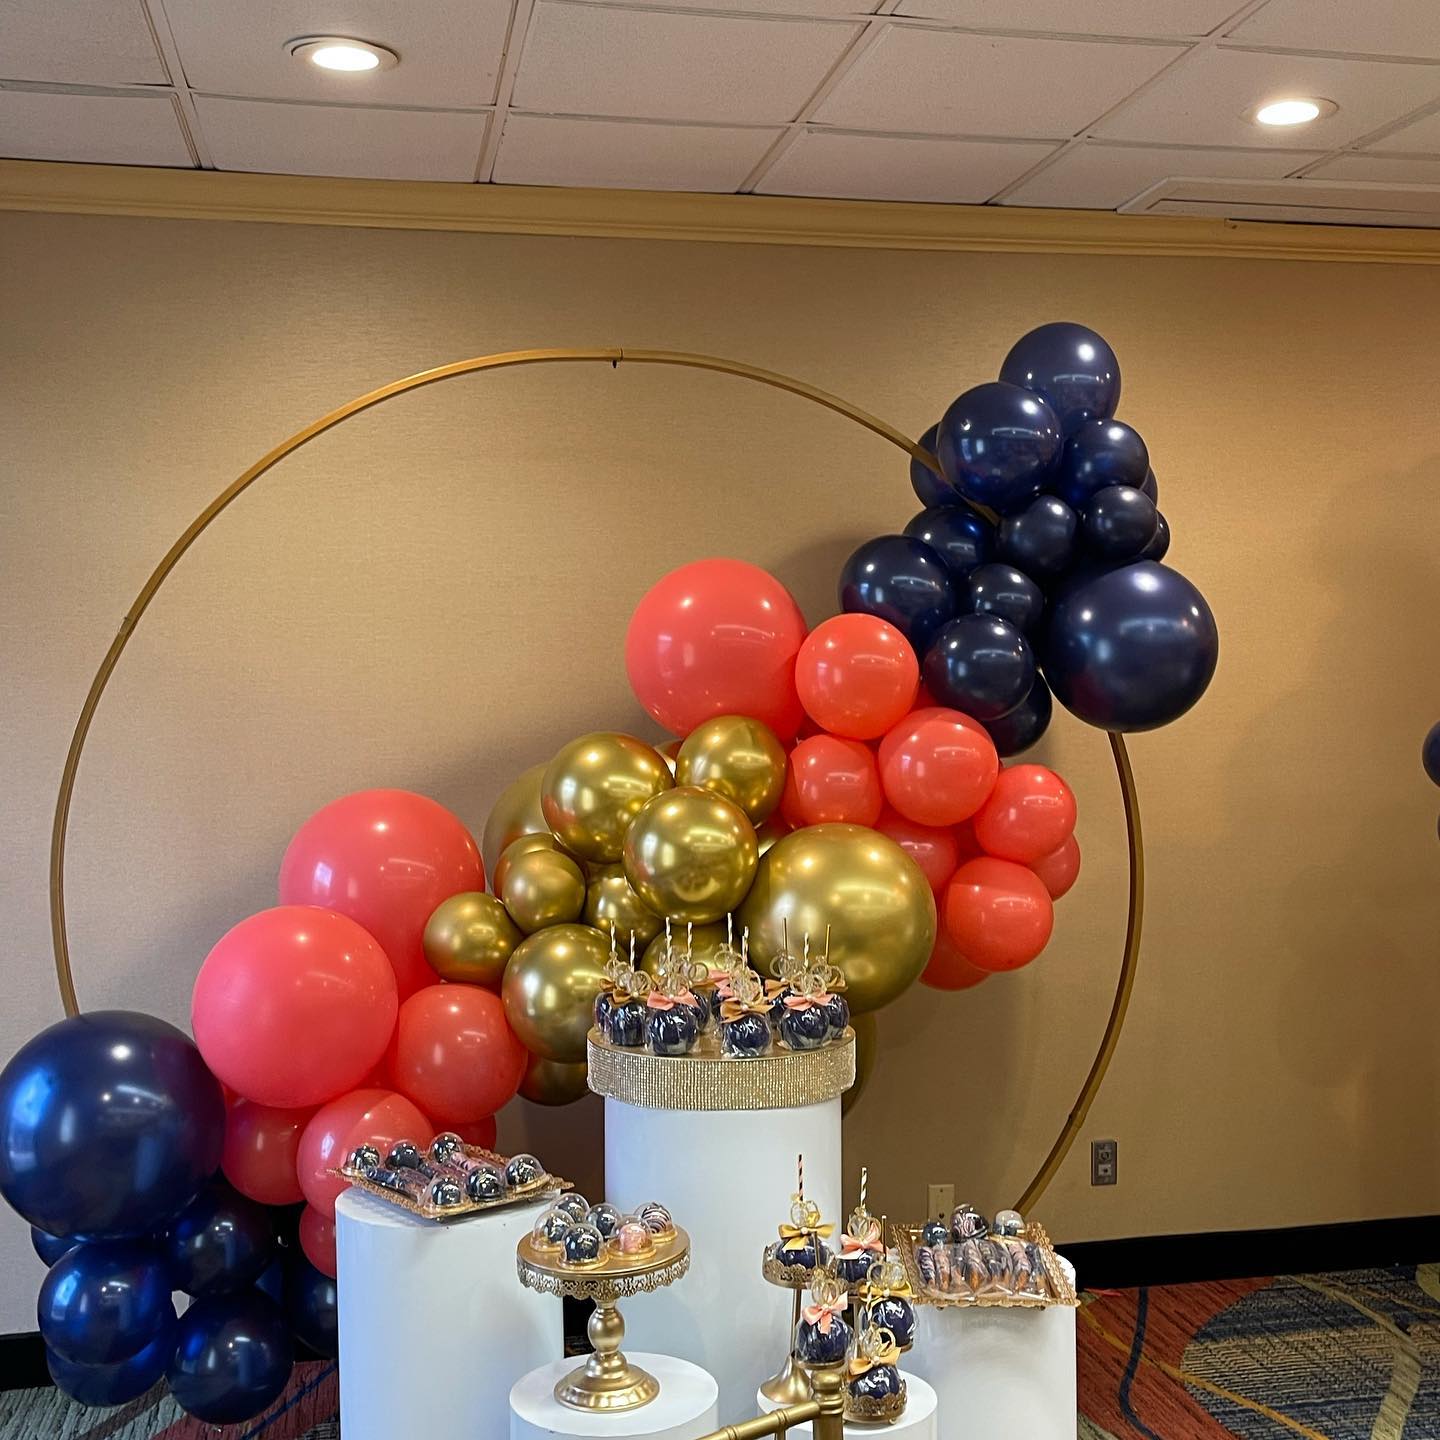 M&K Party Rentals & Balloon Decorations Myra (310)292-7278